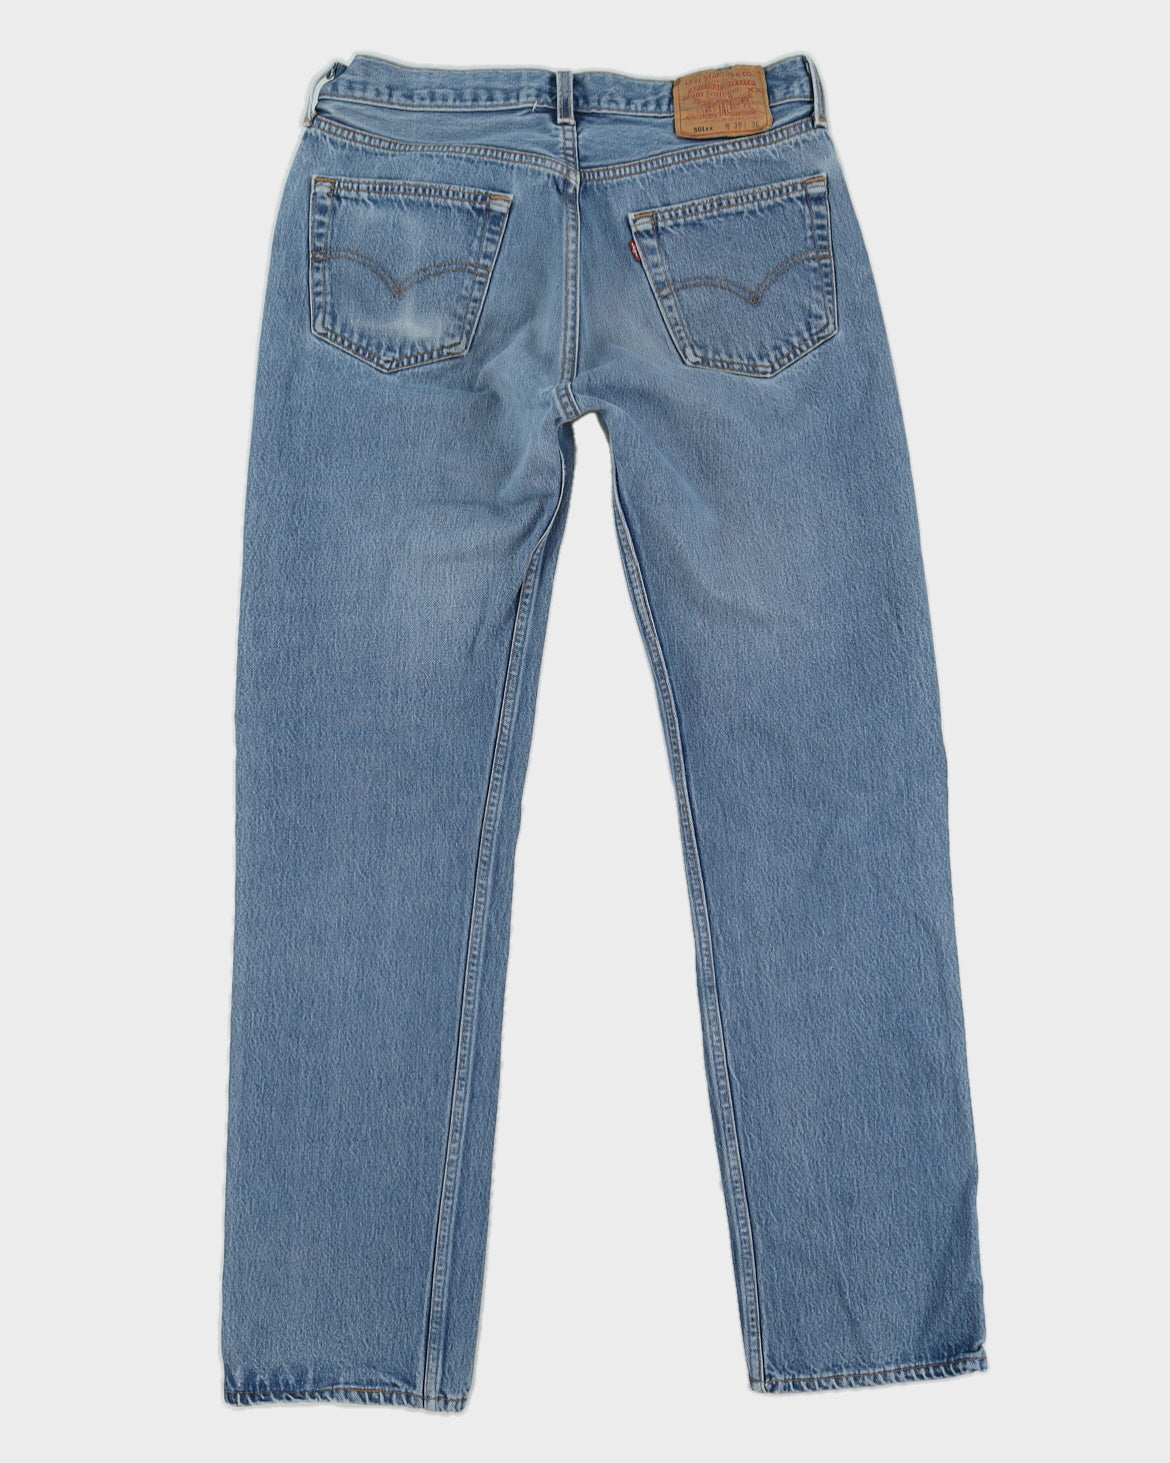 Vintage 90s Levi's 501 Medium Washed Blue Jeans - W32 L33